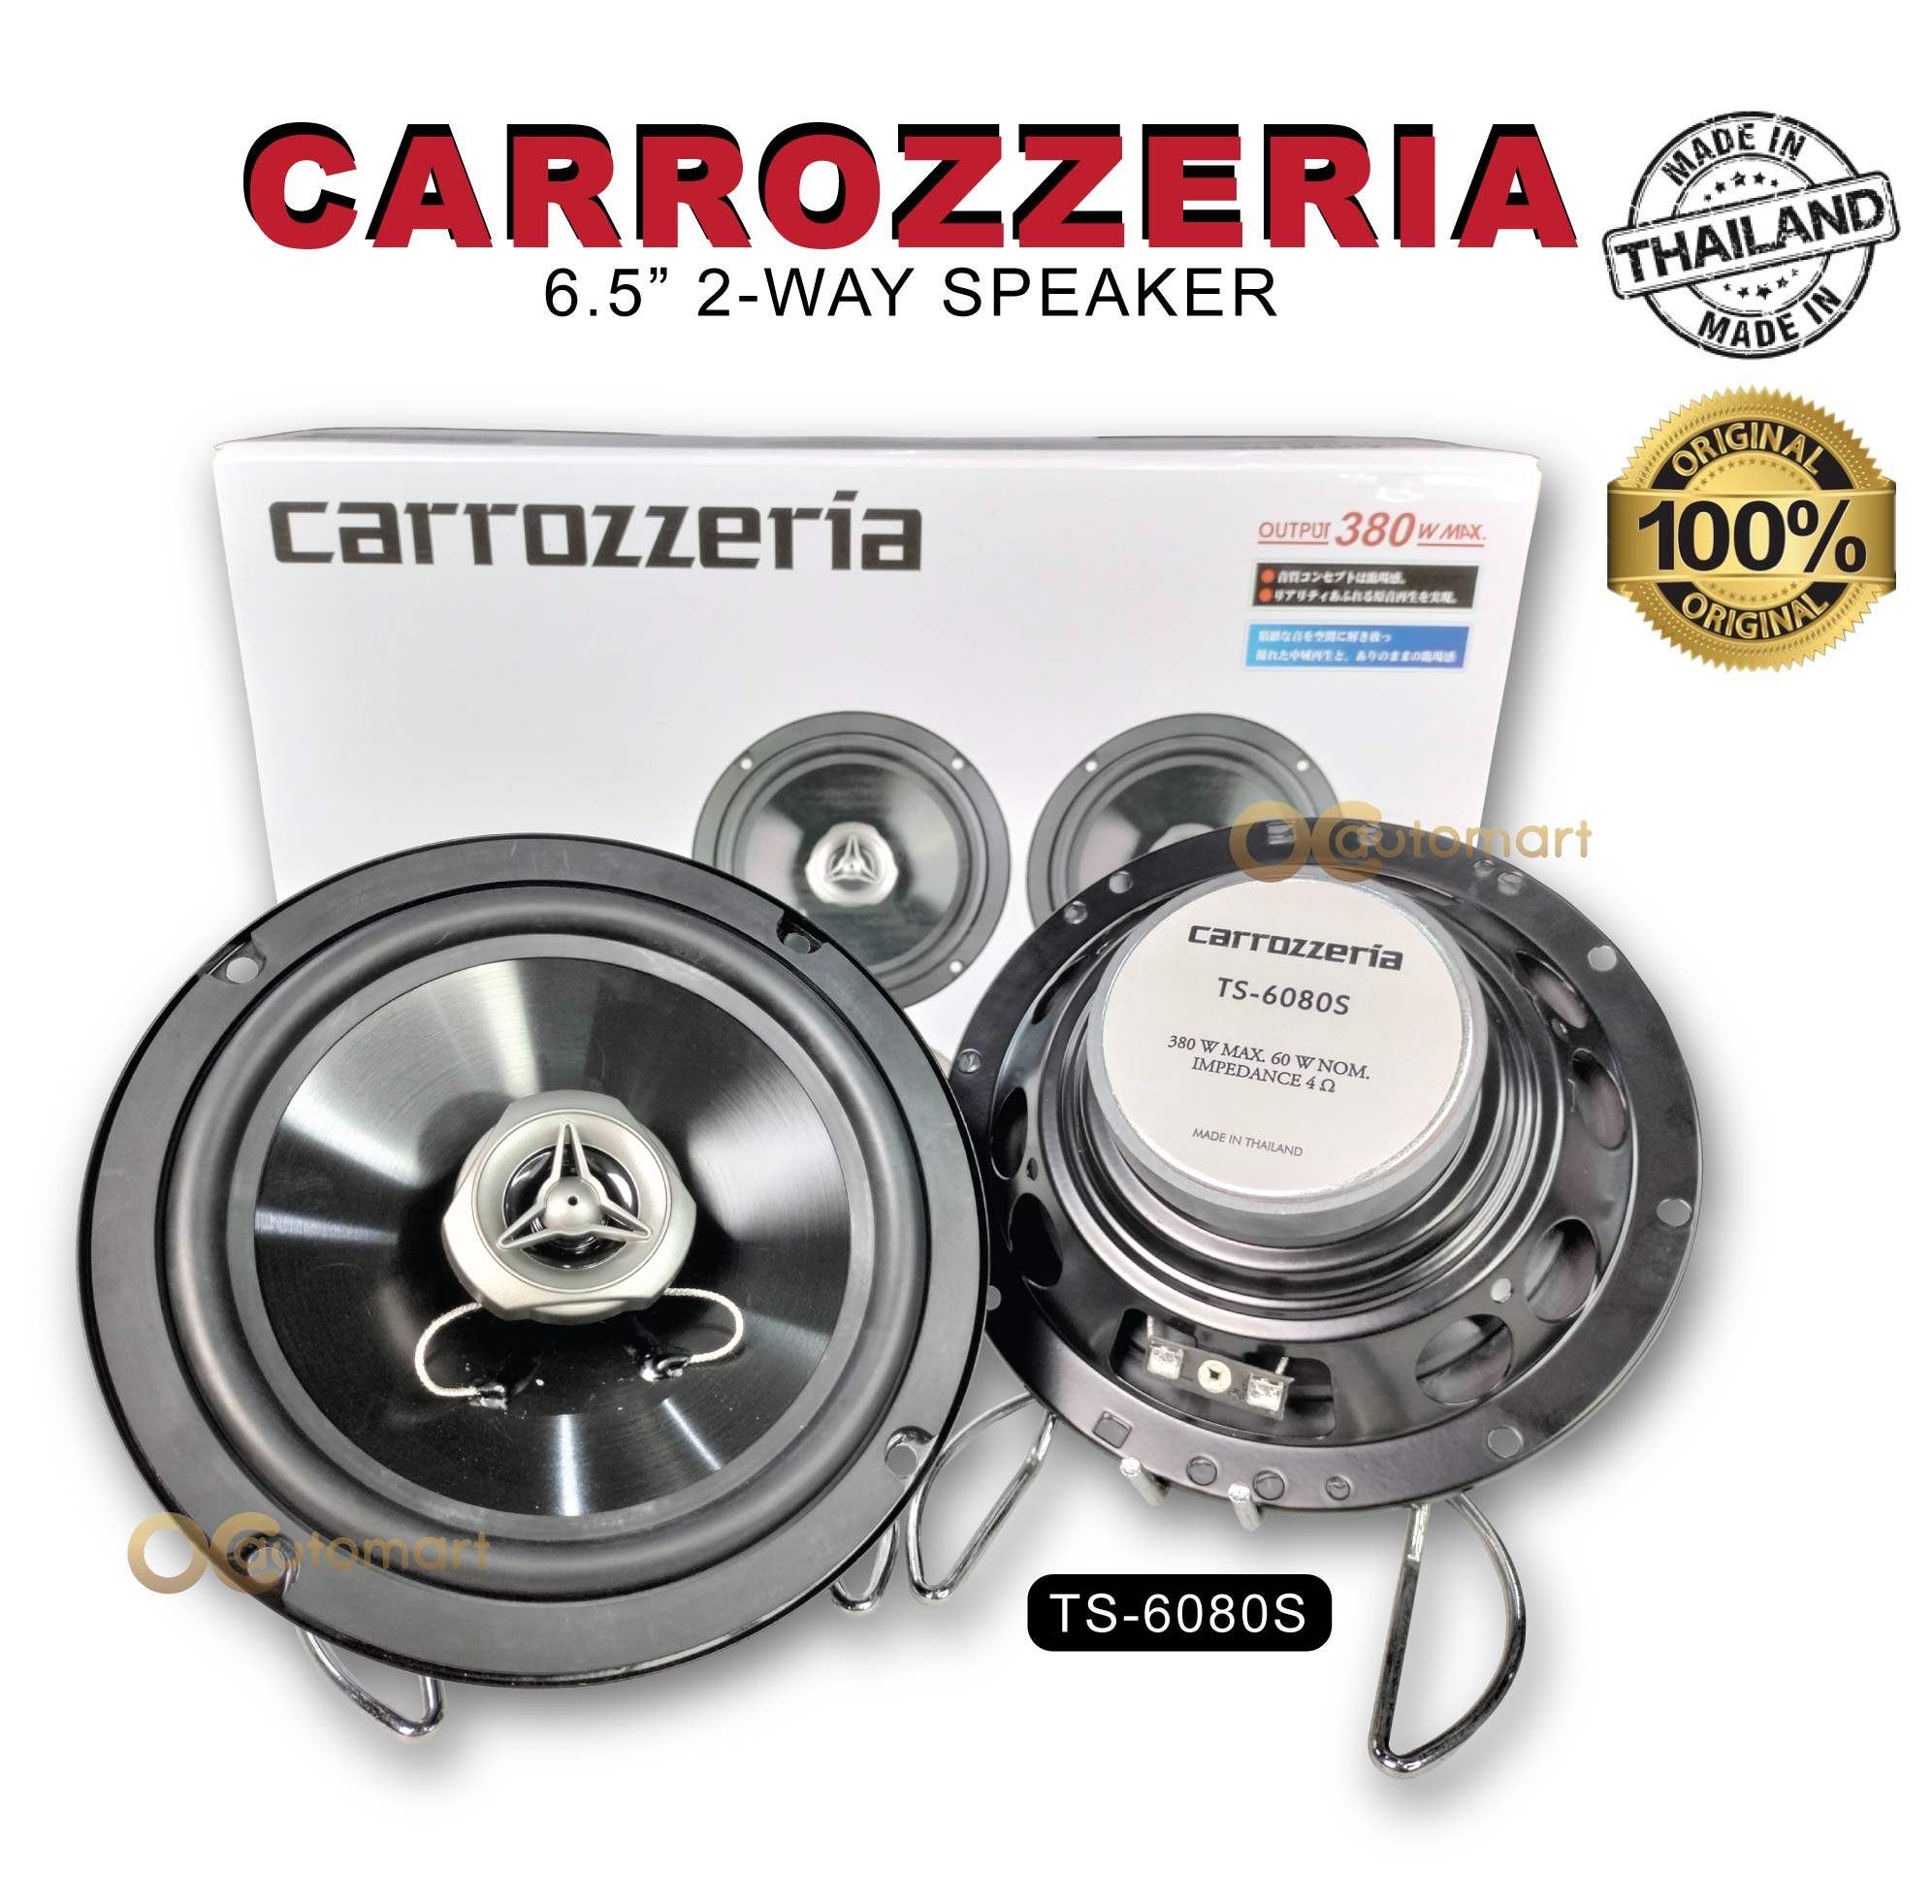 Carrozzeria 6.5 inch 2-Way Car Speaker 100% Original Perodua,Proton,Honda,Toyota,Nissan Car Speaker (Ts-6080s)